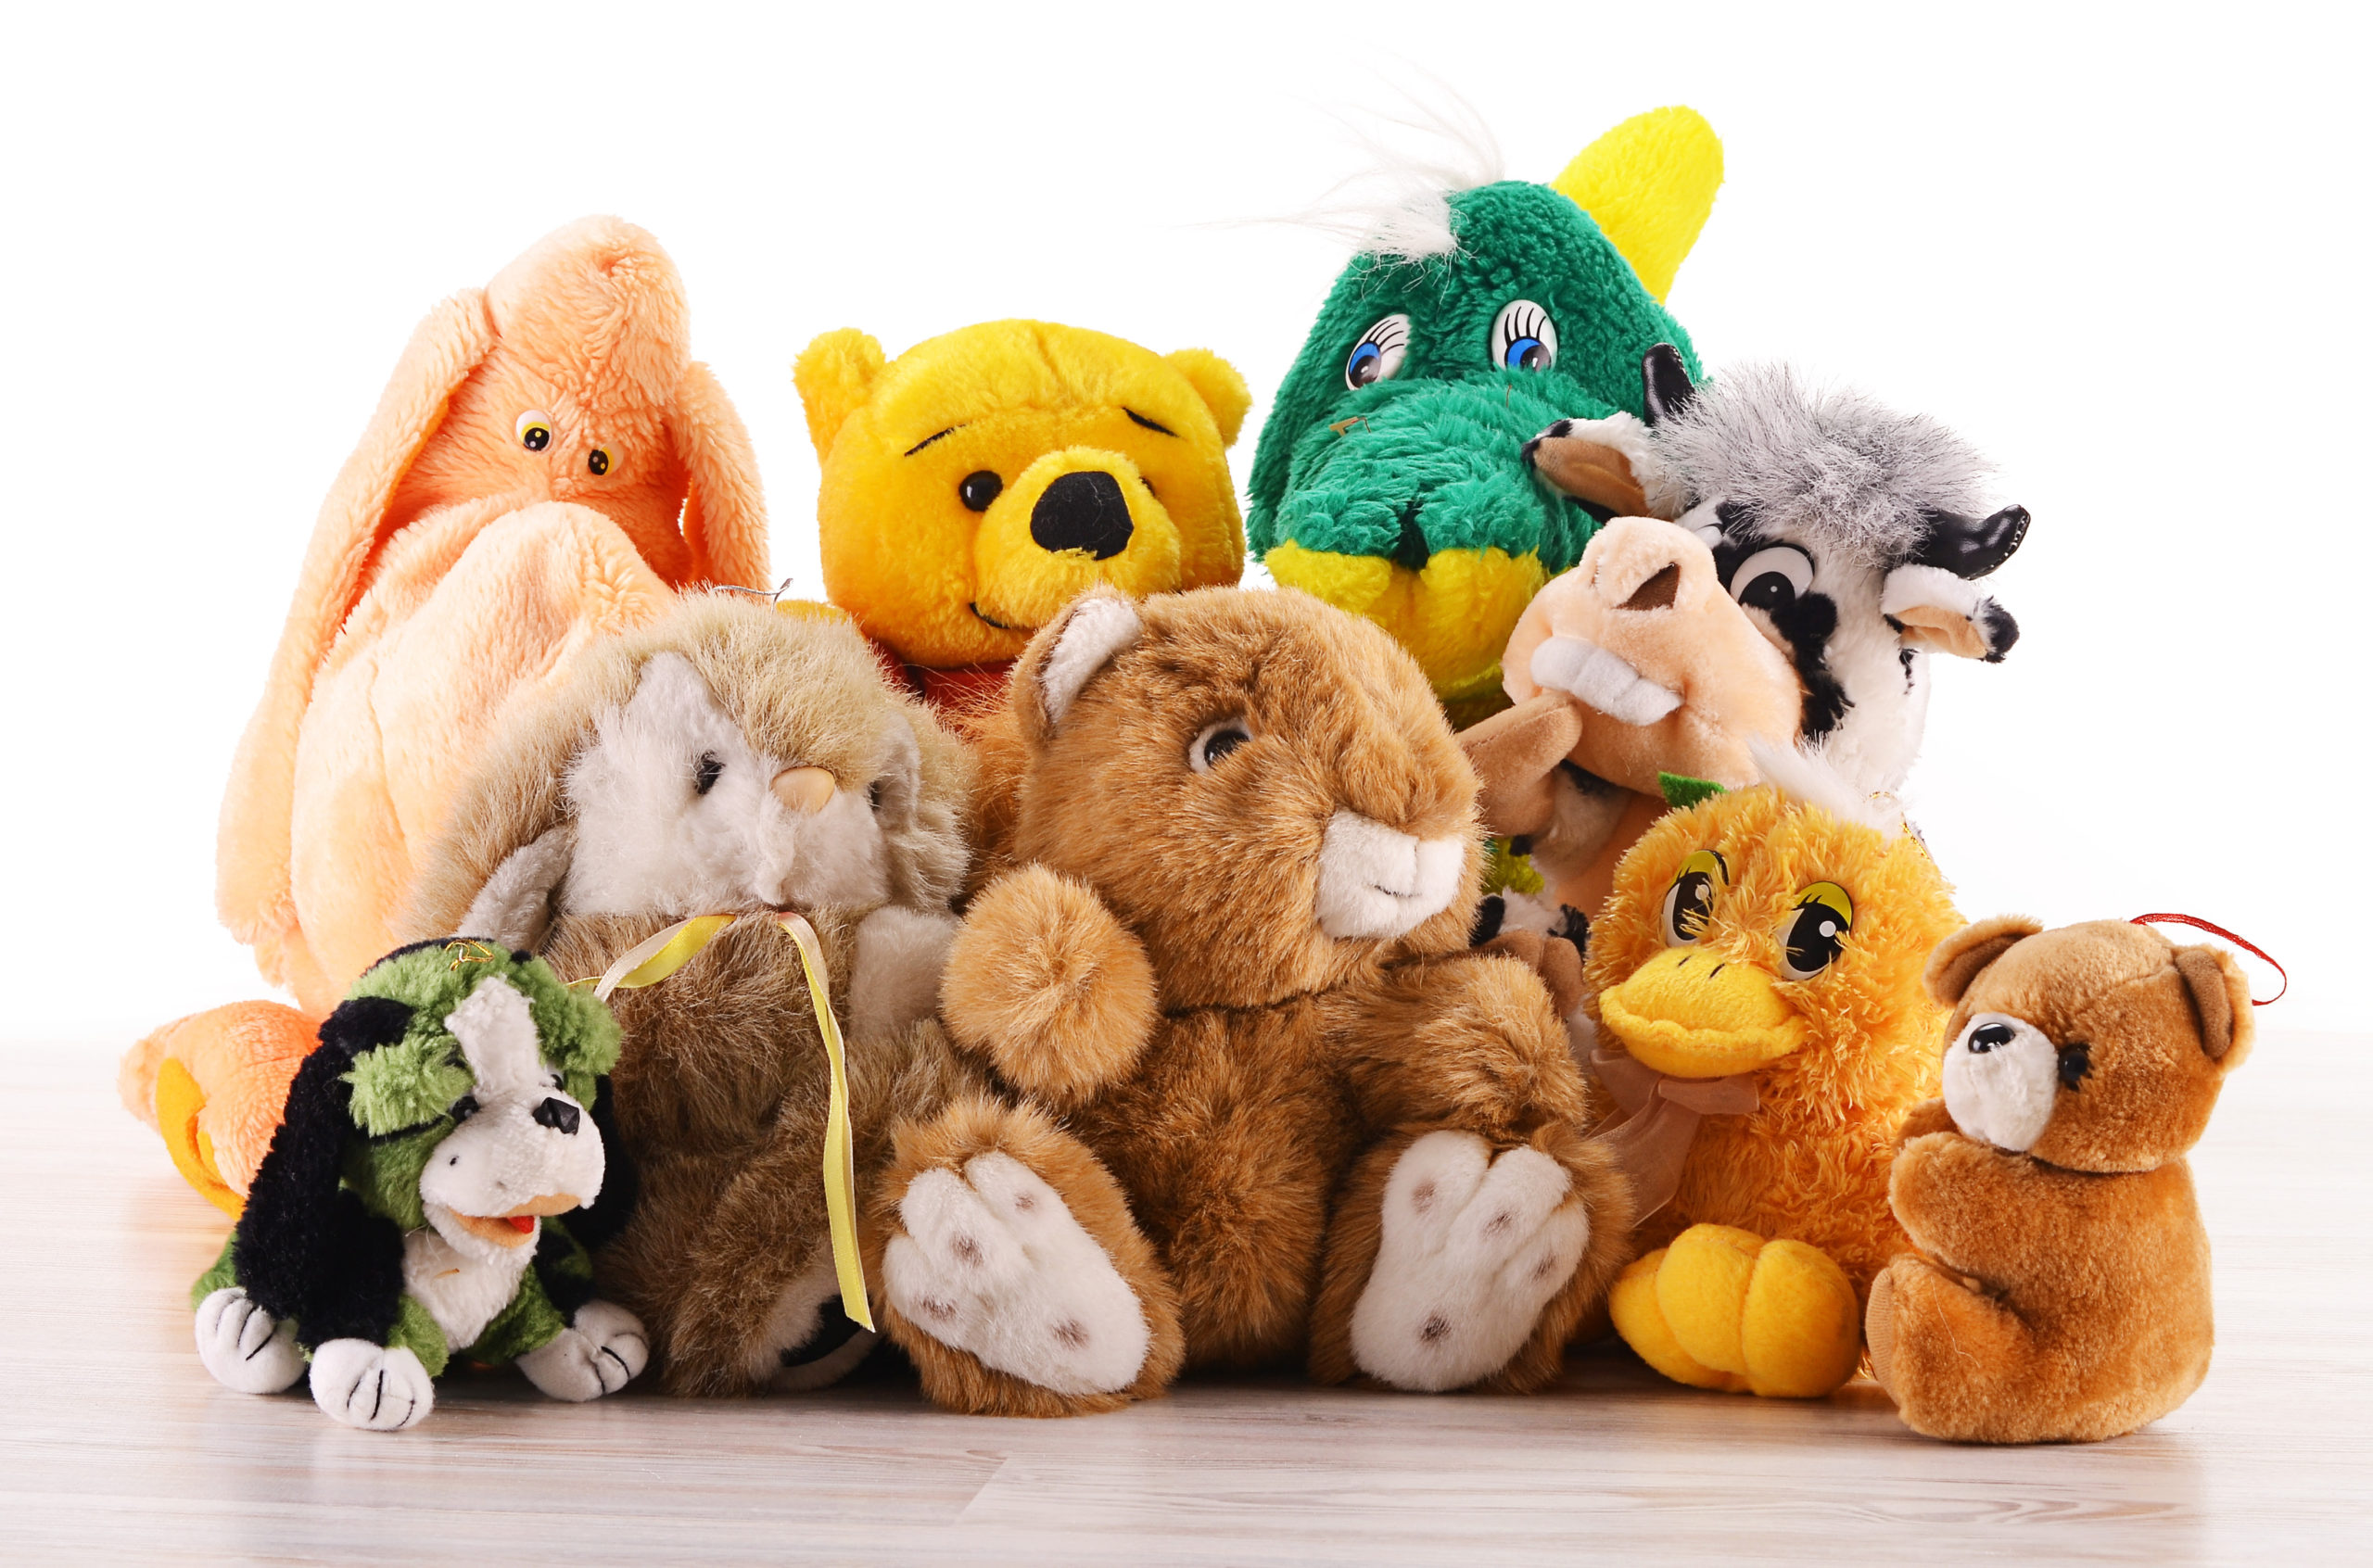 stuffed animals piled high